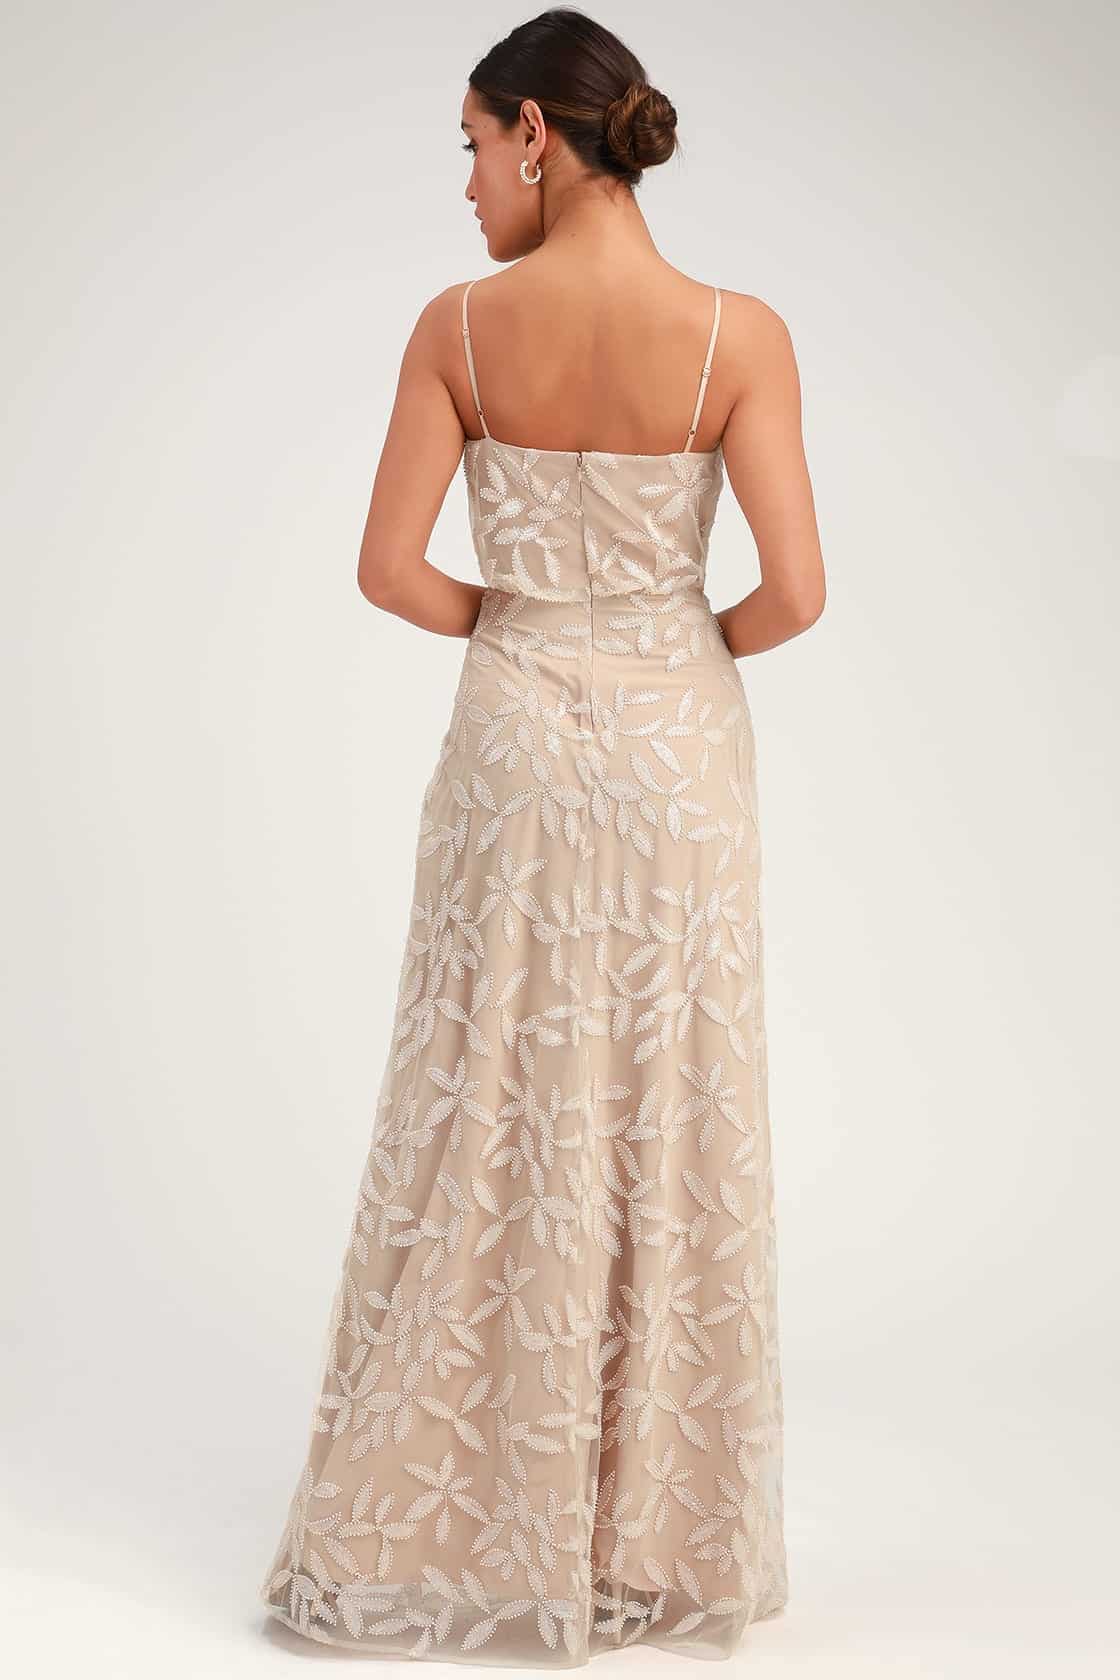 Bridal Shower Dresses for the Bride Beige Sequin Sleeveless Maxi Dress 3